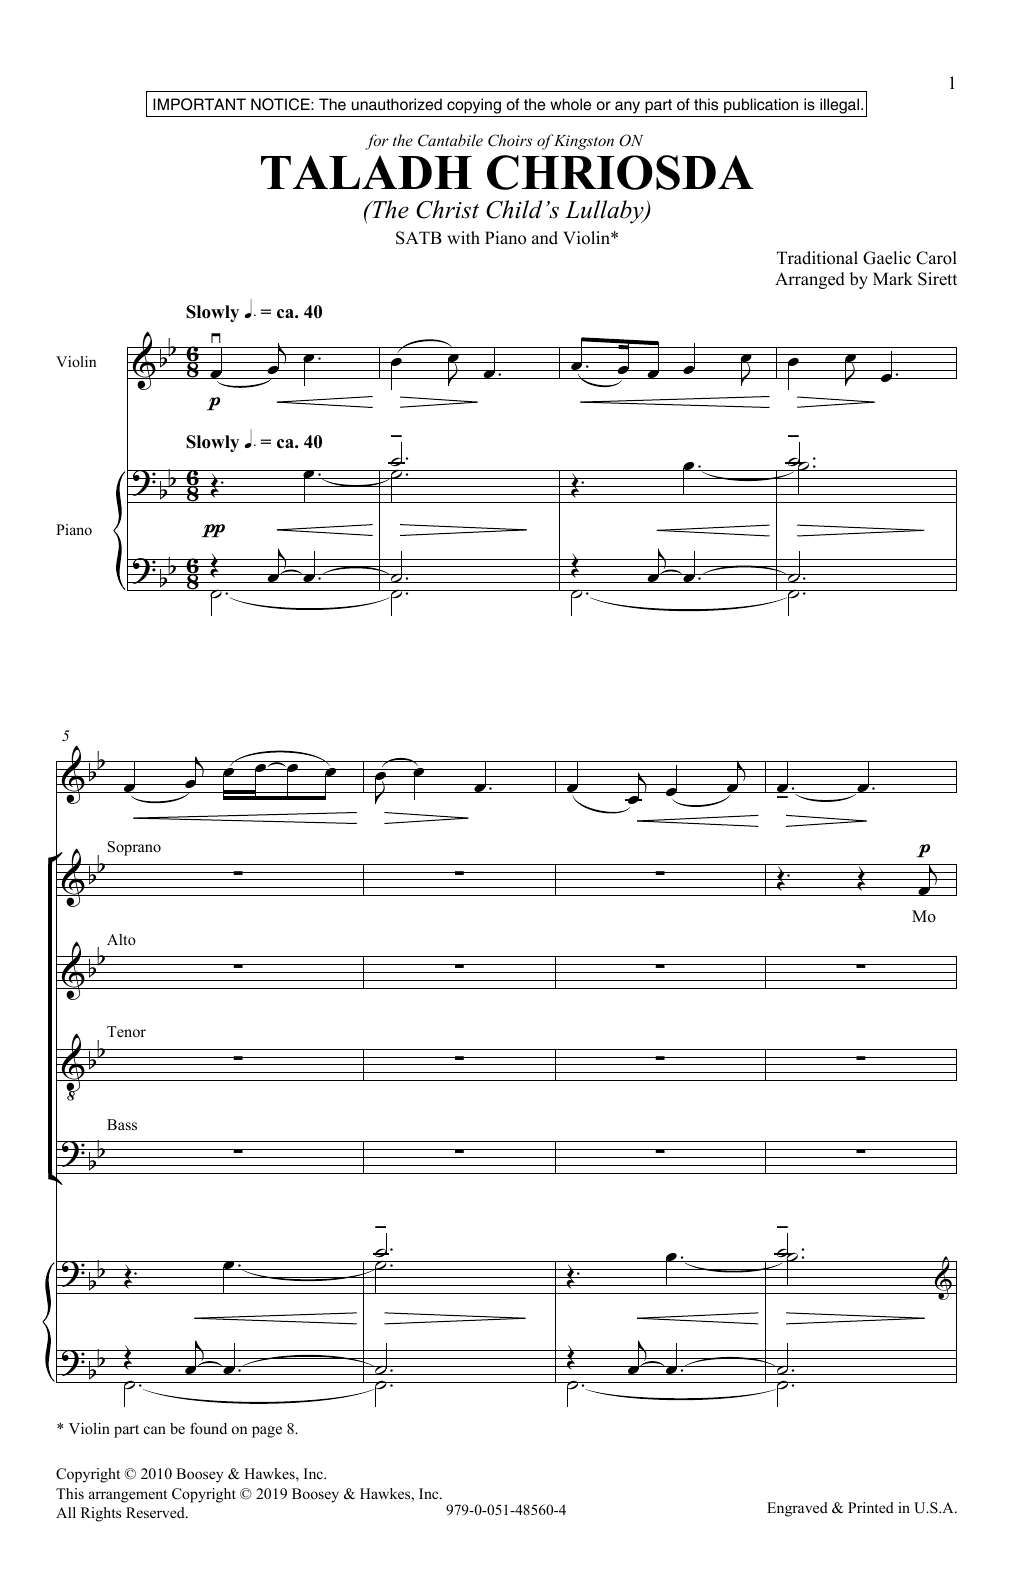 Download Traditional Gaelic Carol Taladh Chriosda (arr. Mark Sirett) Sheet Music and learn how to play SATB Choir PDF digital score in minutes